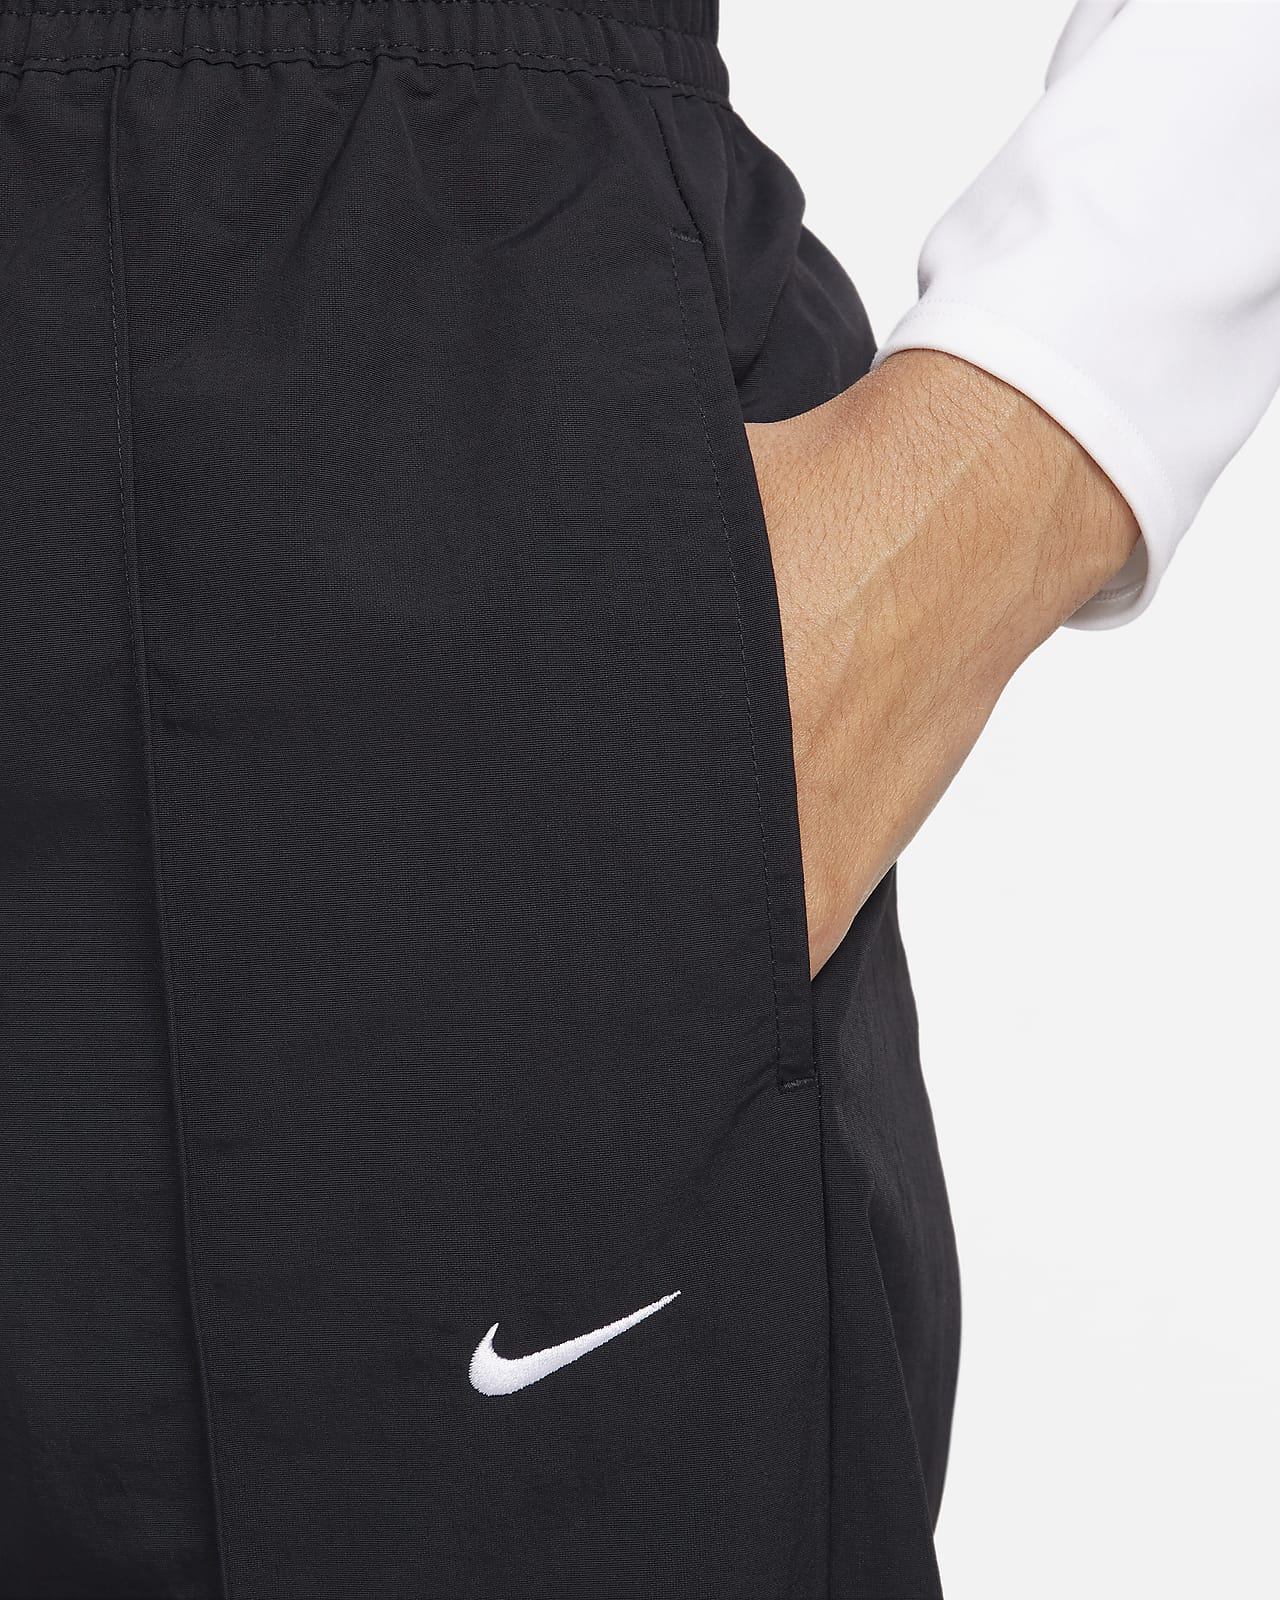 Pants de tiro medio para mujer Nike Sportswear Club Fleece. Nike MX